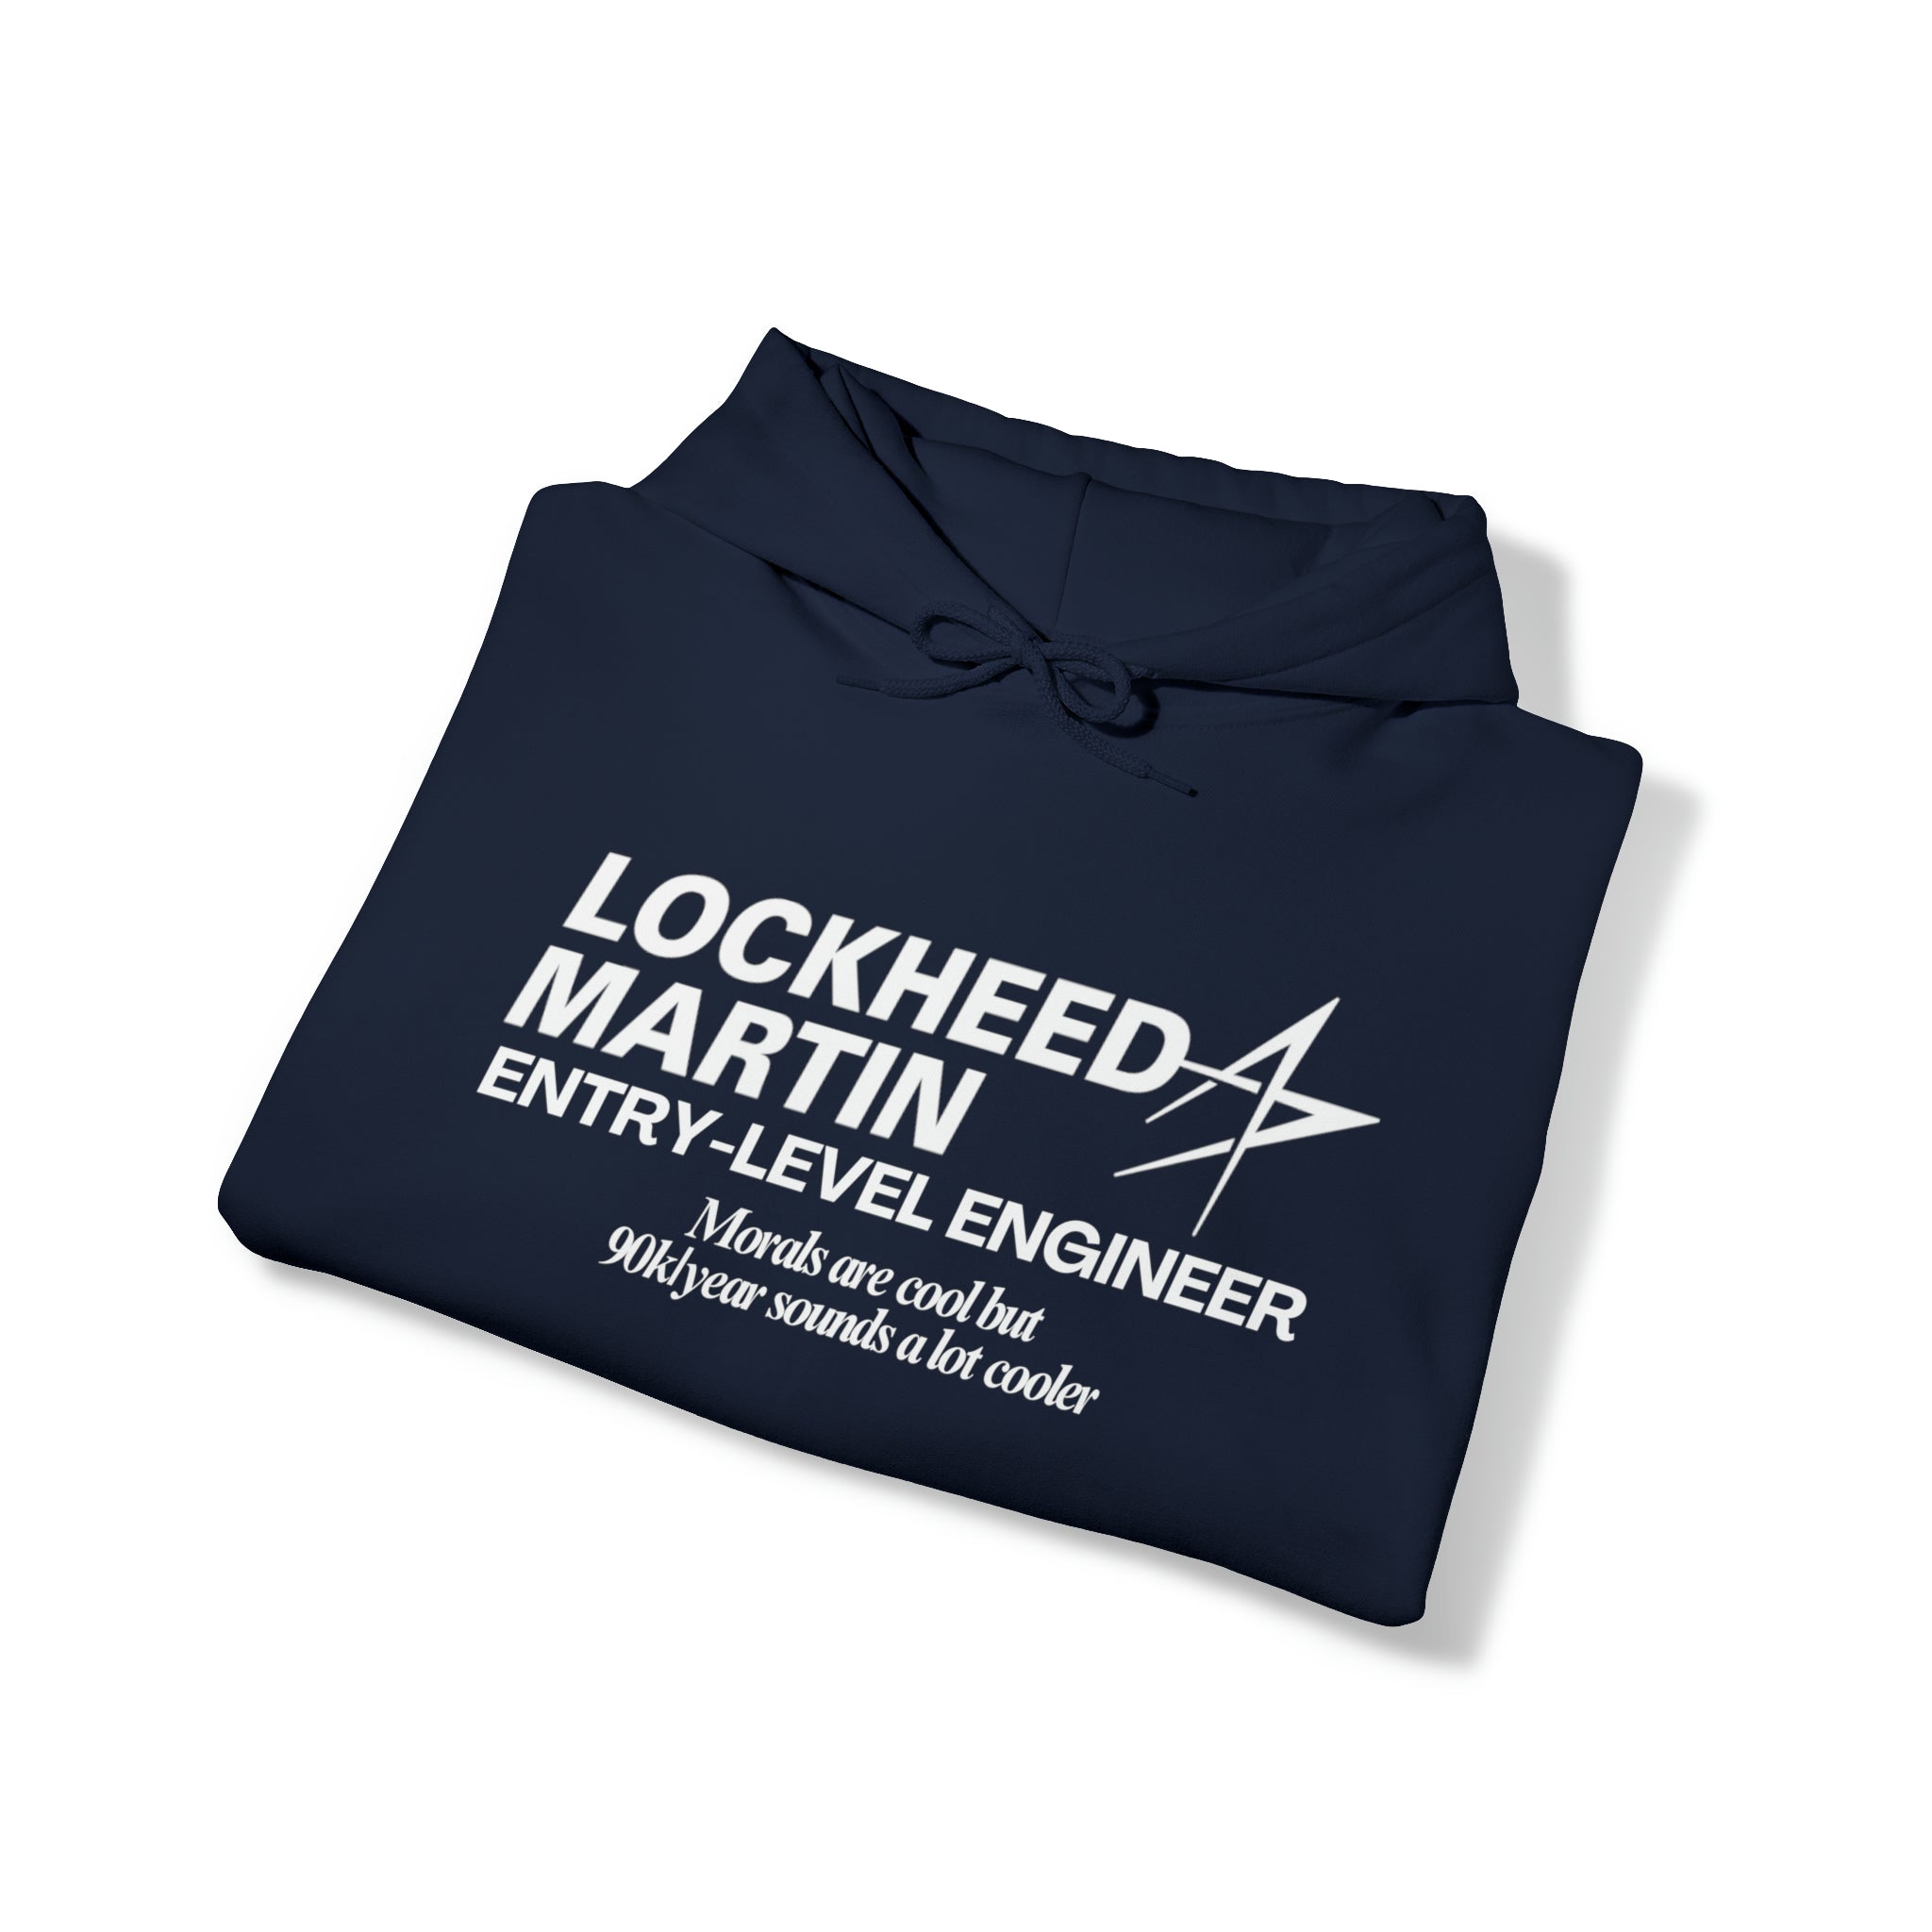 Lockheed Martin Entry Level Engineer - Unisex Heavy Blend™ Hooded Sweatshirt